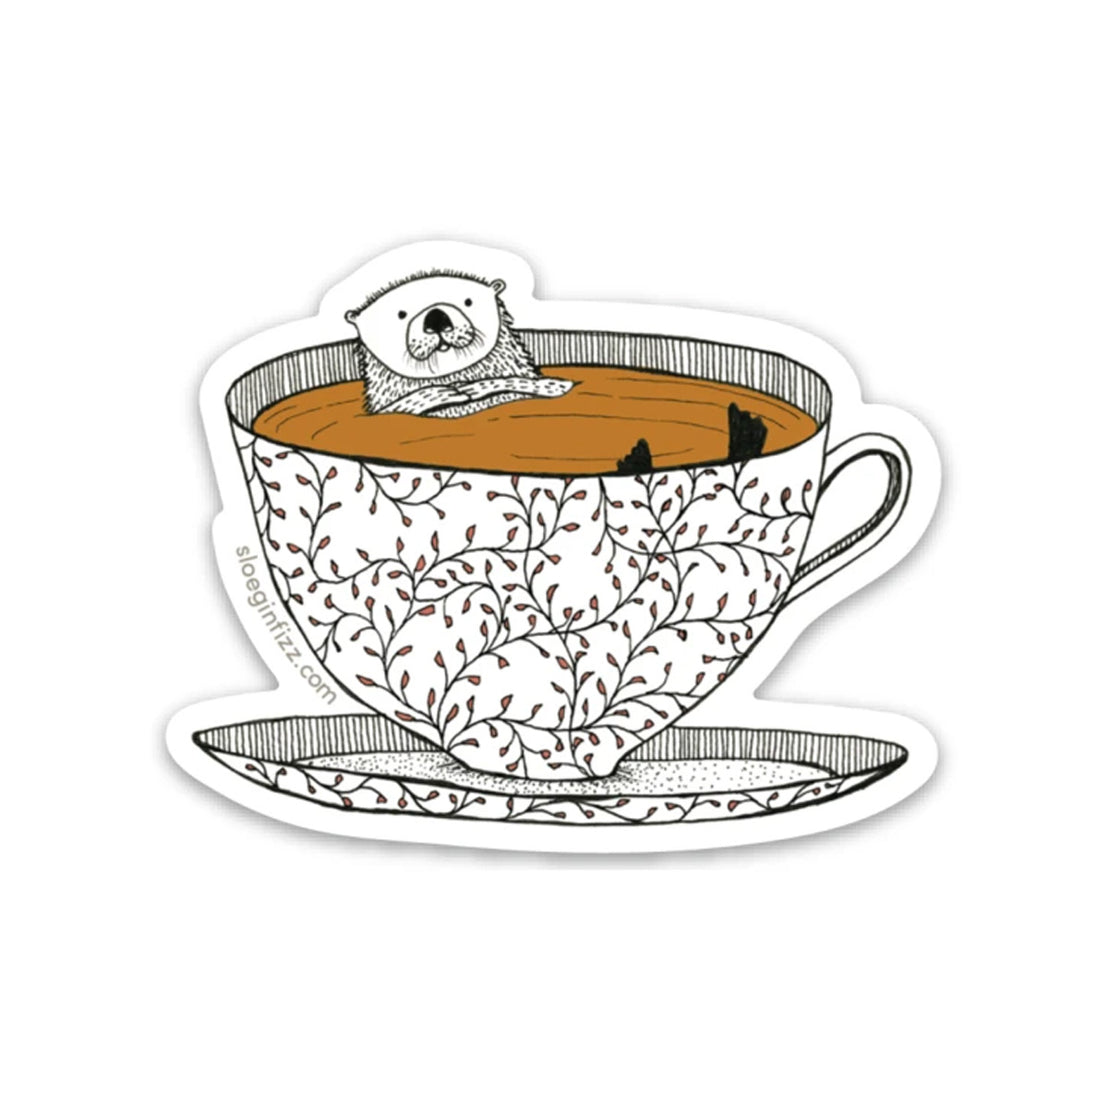 Tea Otter Sticker